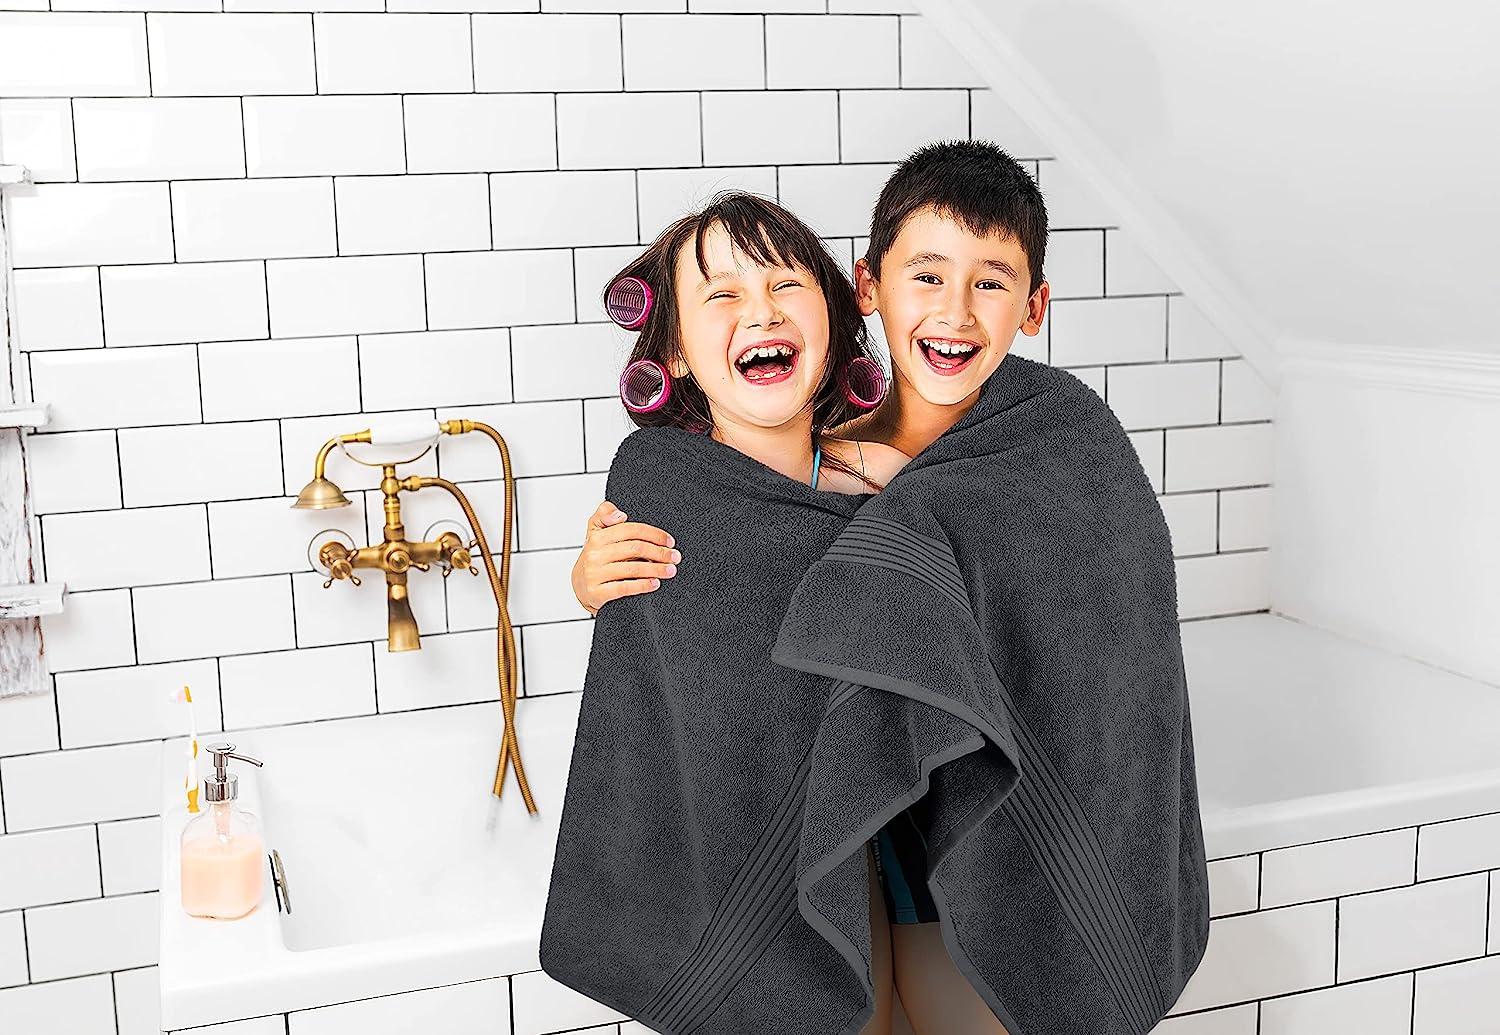 Utopia Towels - Luxurious Jumbo Bath Sheet 2 Piece - 600 GSM 100